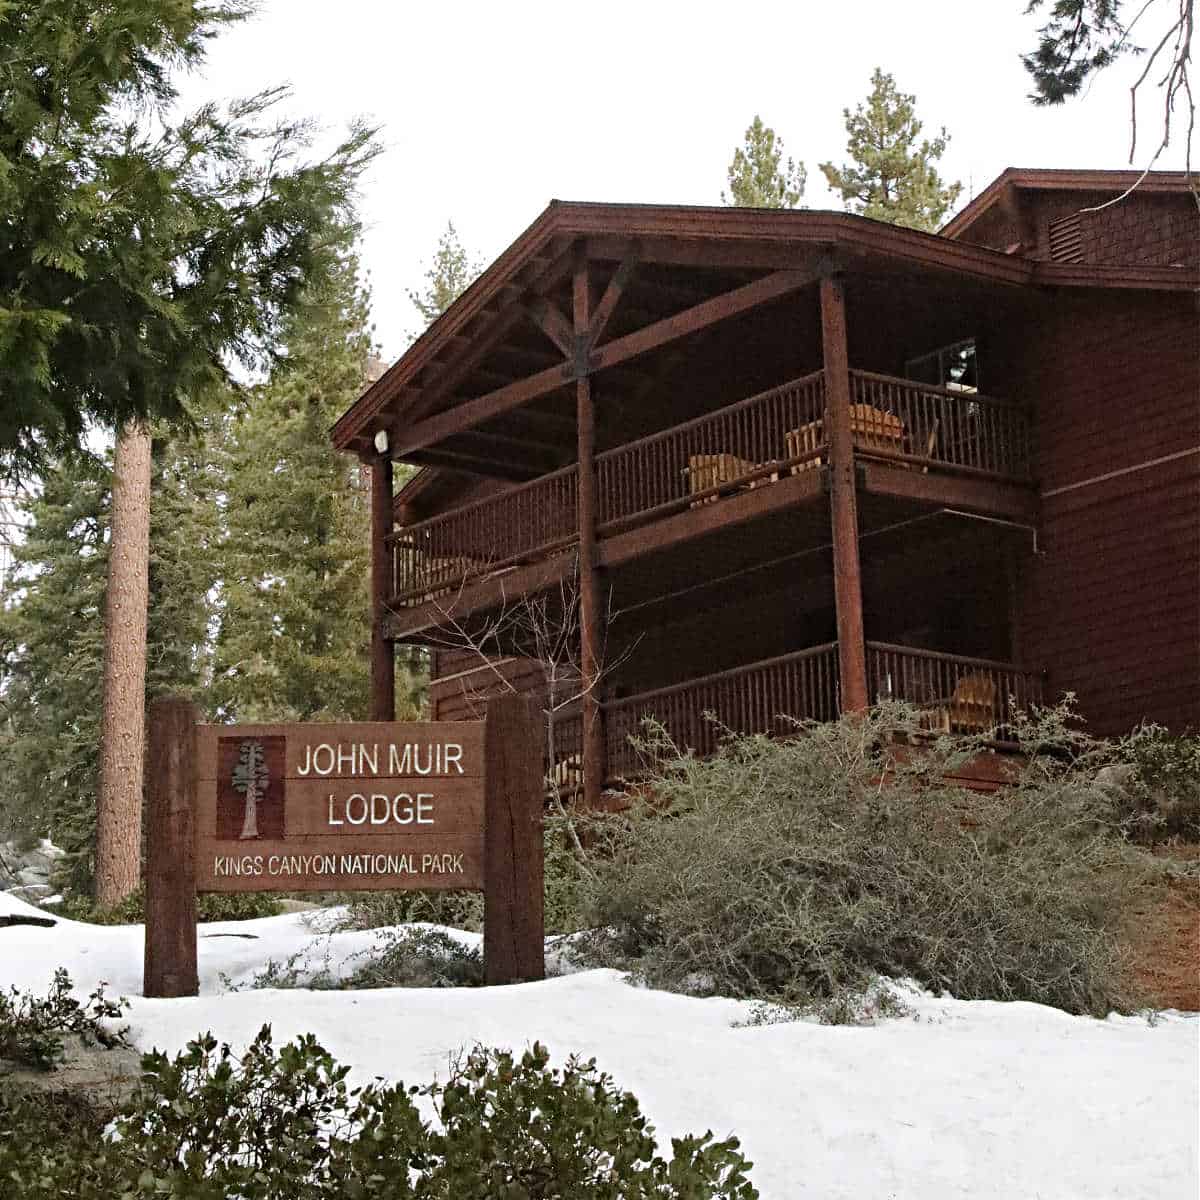 John Muir Lodge at Kings Canyon National Park in California